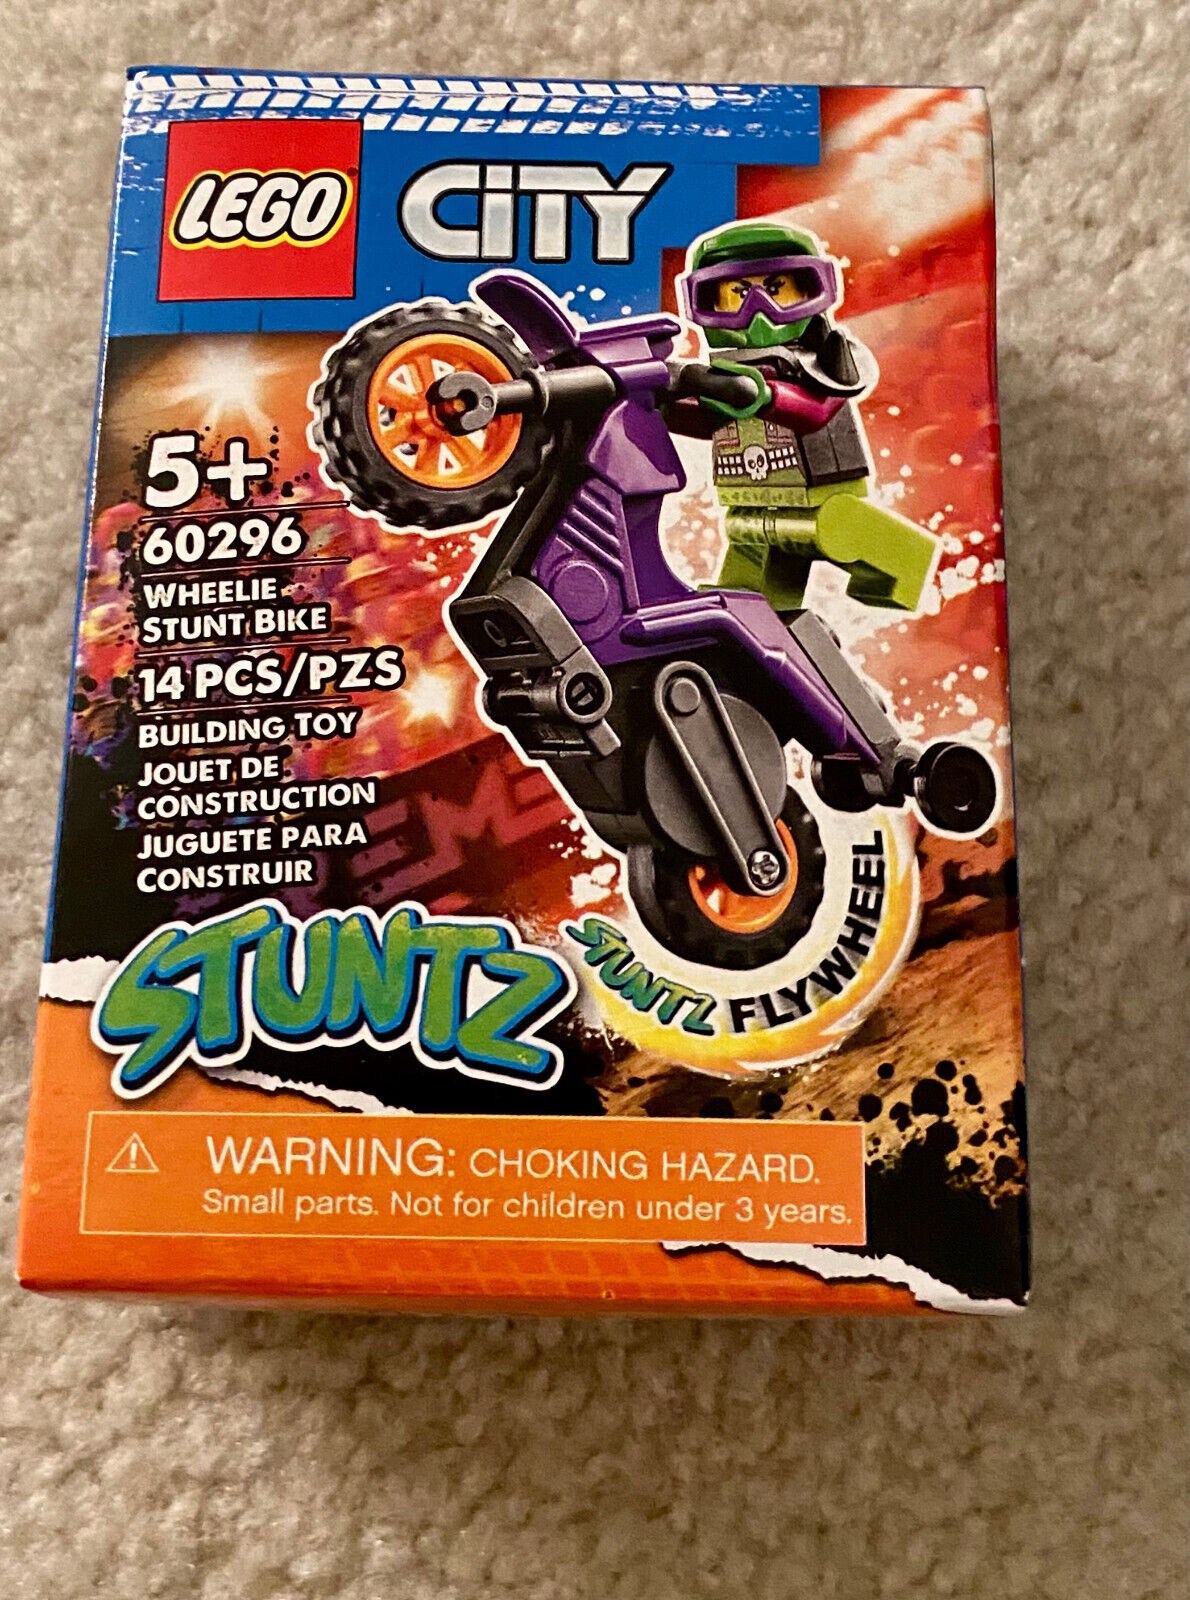 Lego City 60296 Wheelie Stunt Bike Retired Sealed New in Box Complete Set